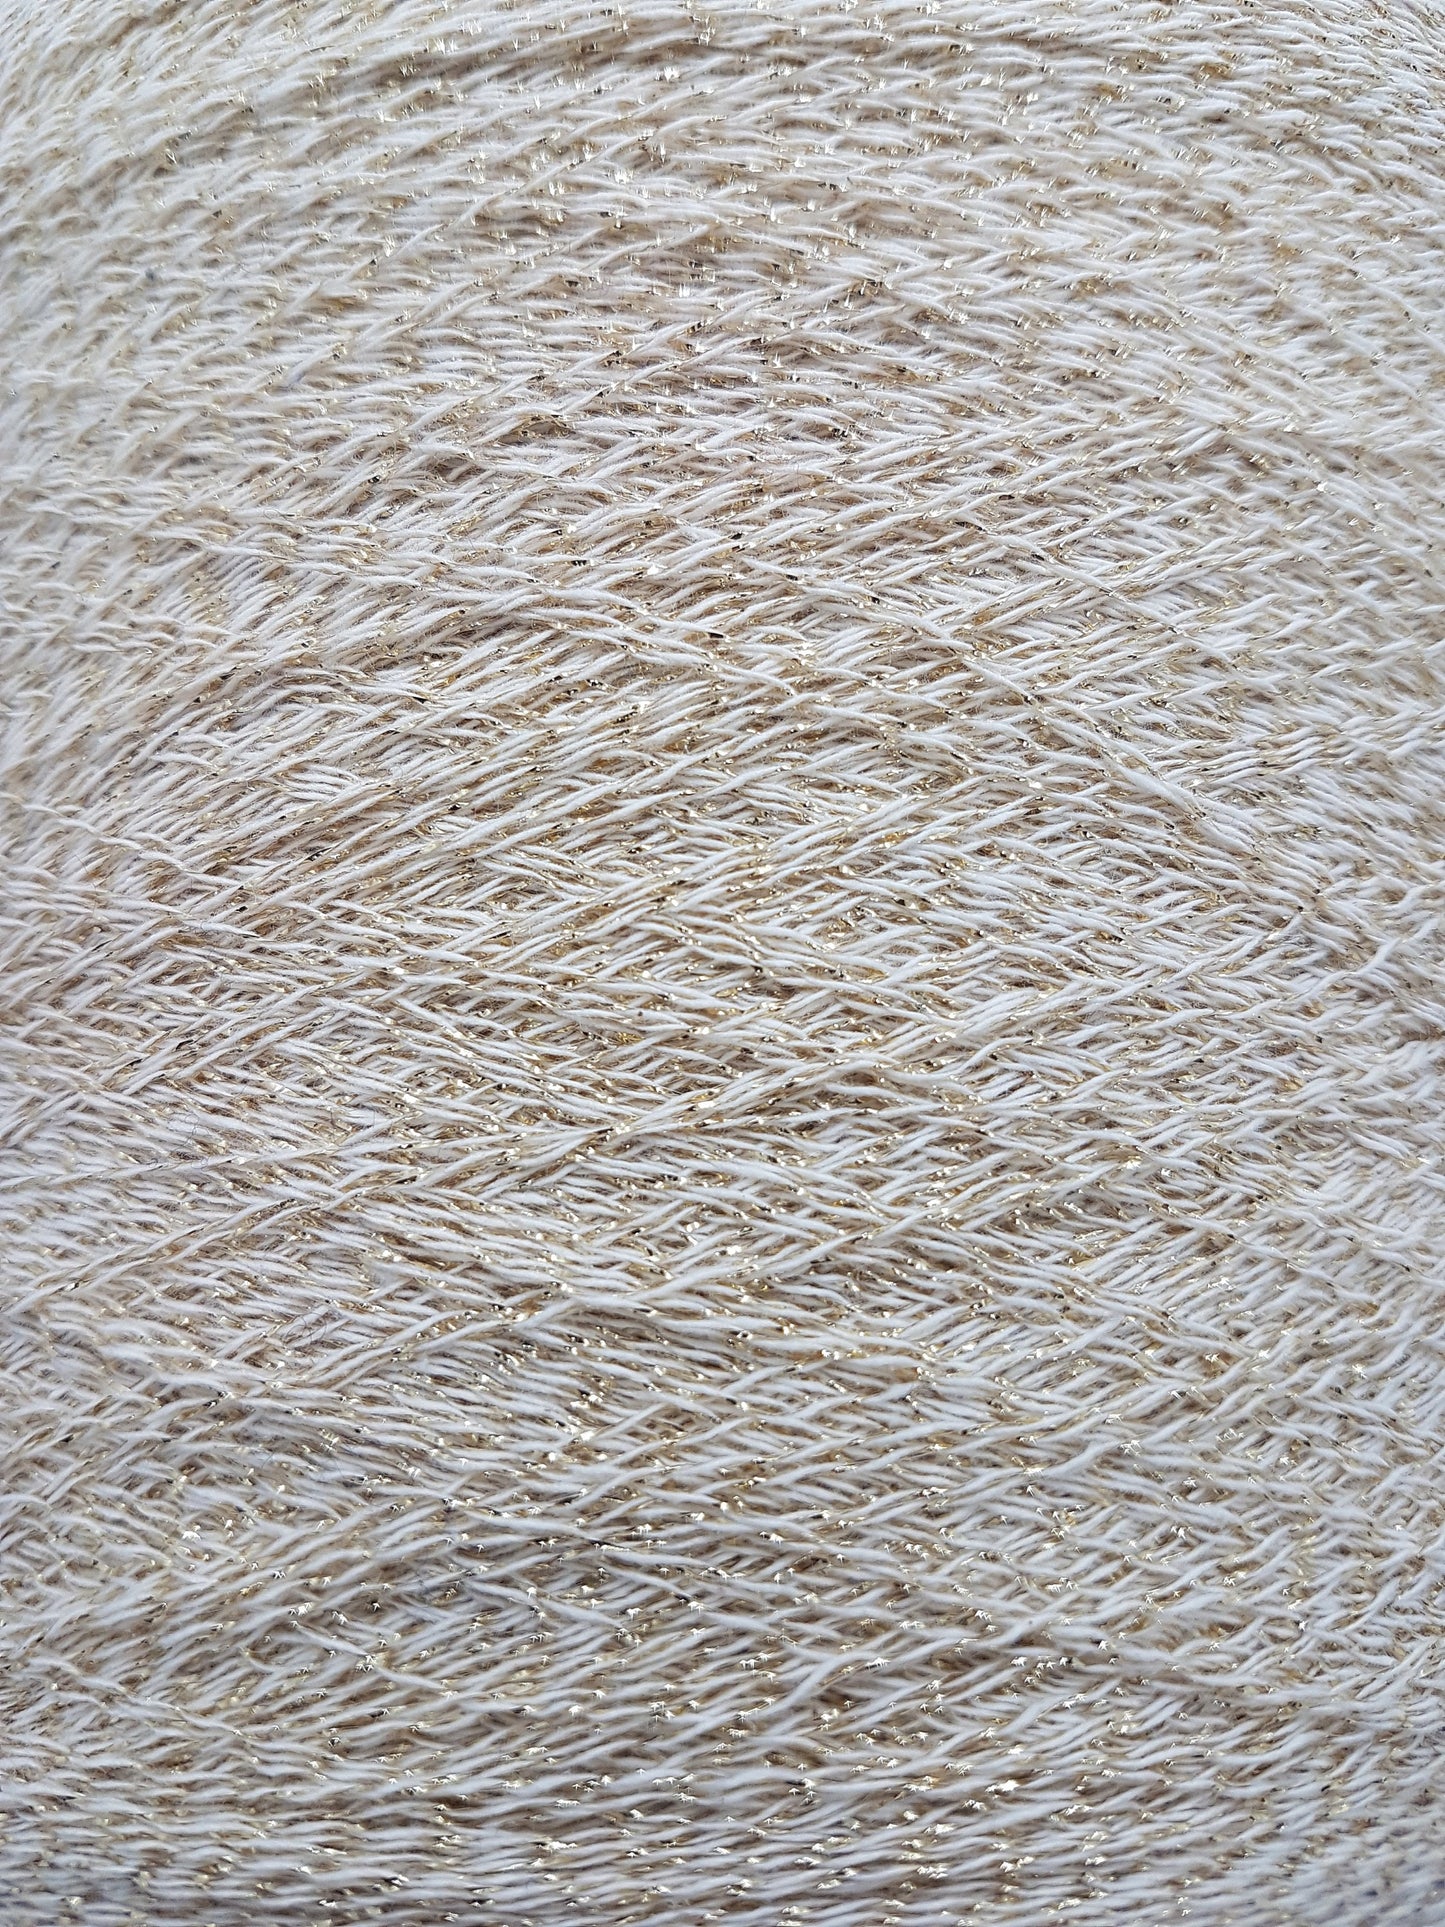 25-50-100g Wool/Cotton Lurex Italian Knitting Yarn color Gold&Ivory/Light Beige N.33